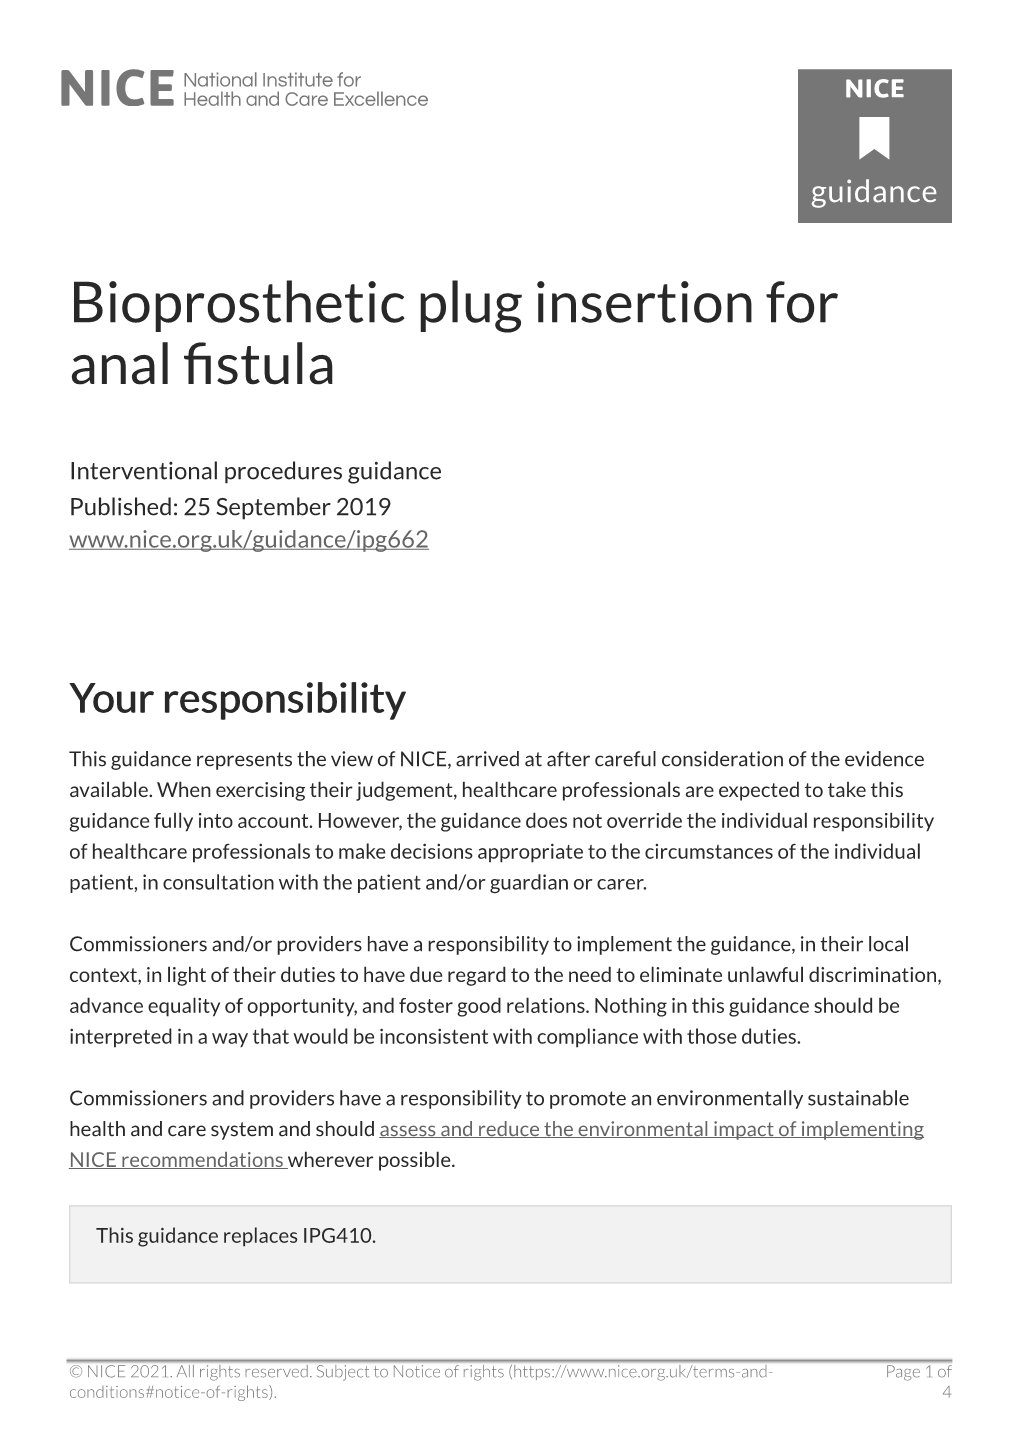 Bioprosthetic Plug Insertion for Anal Fistula